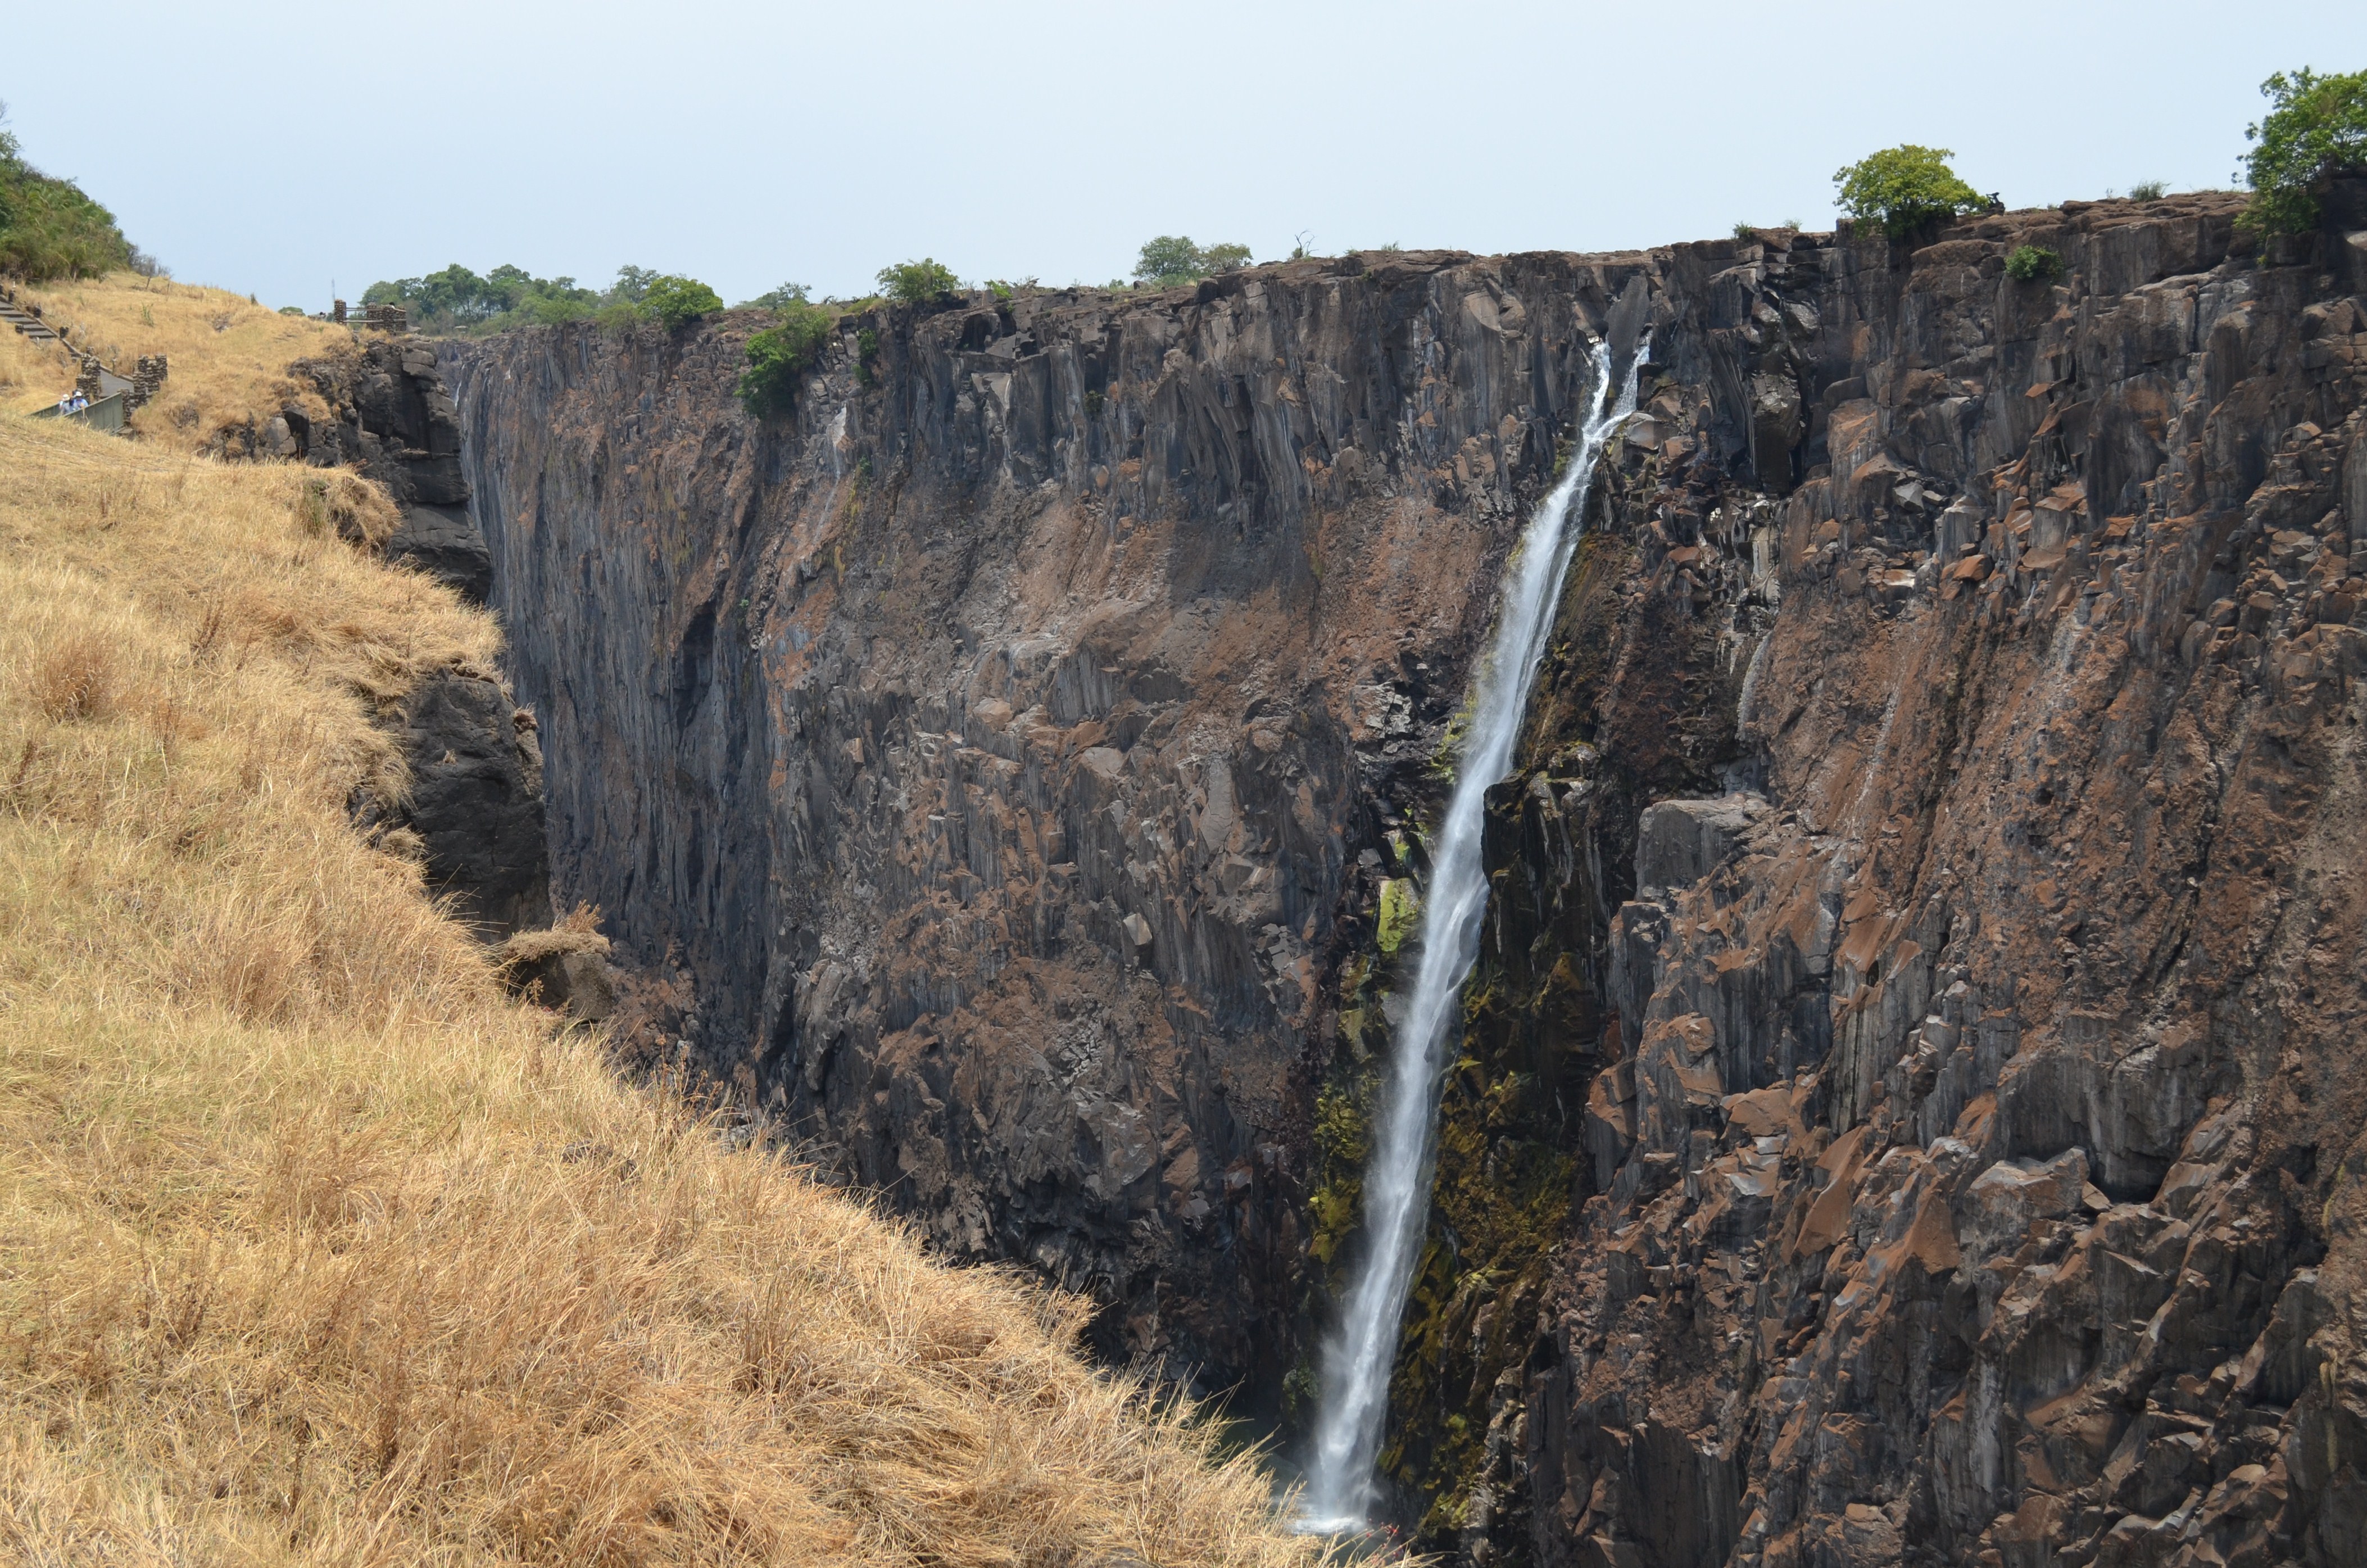 Visiting Victoria falls in dry season